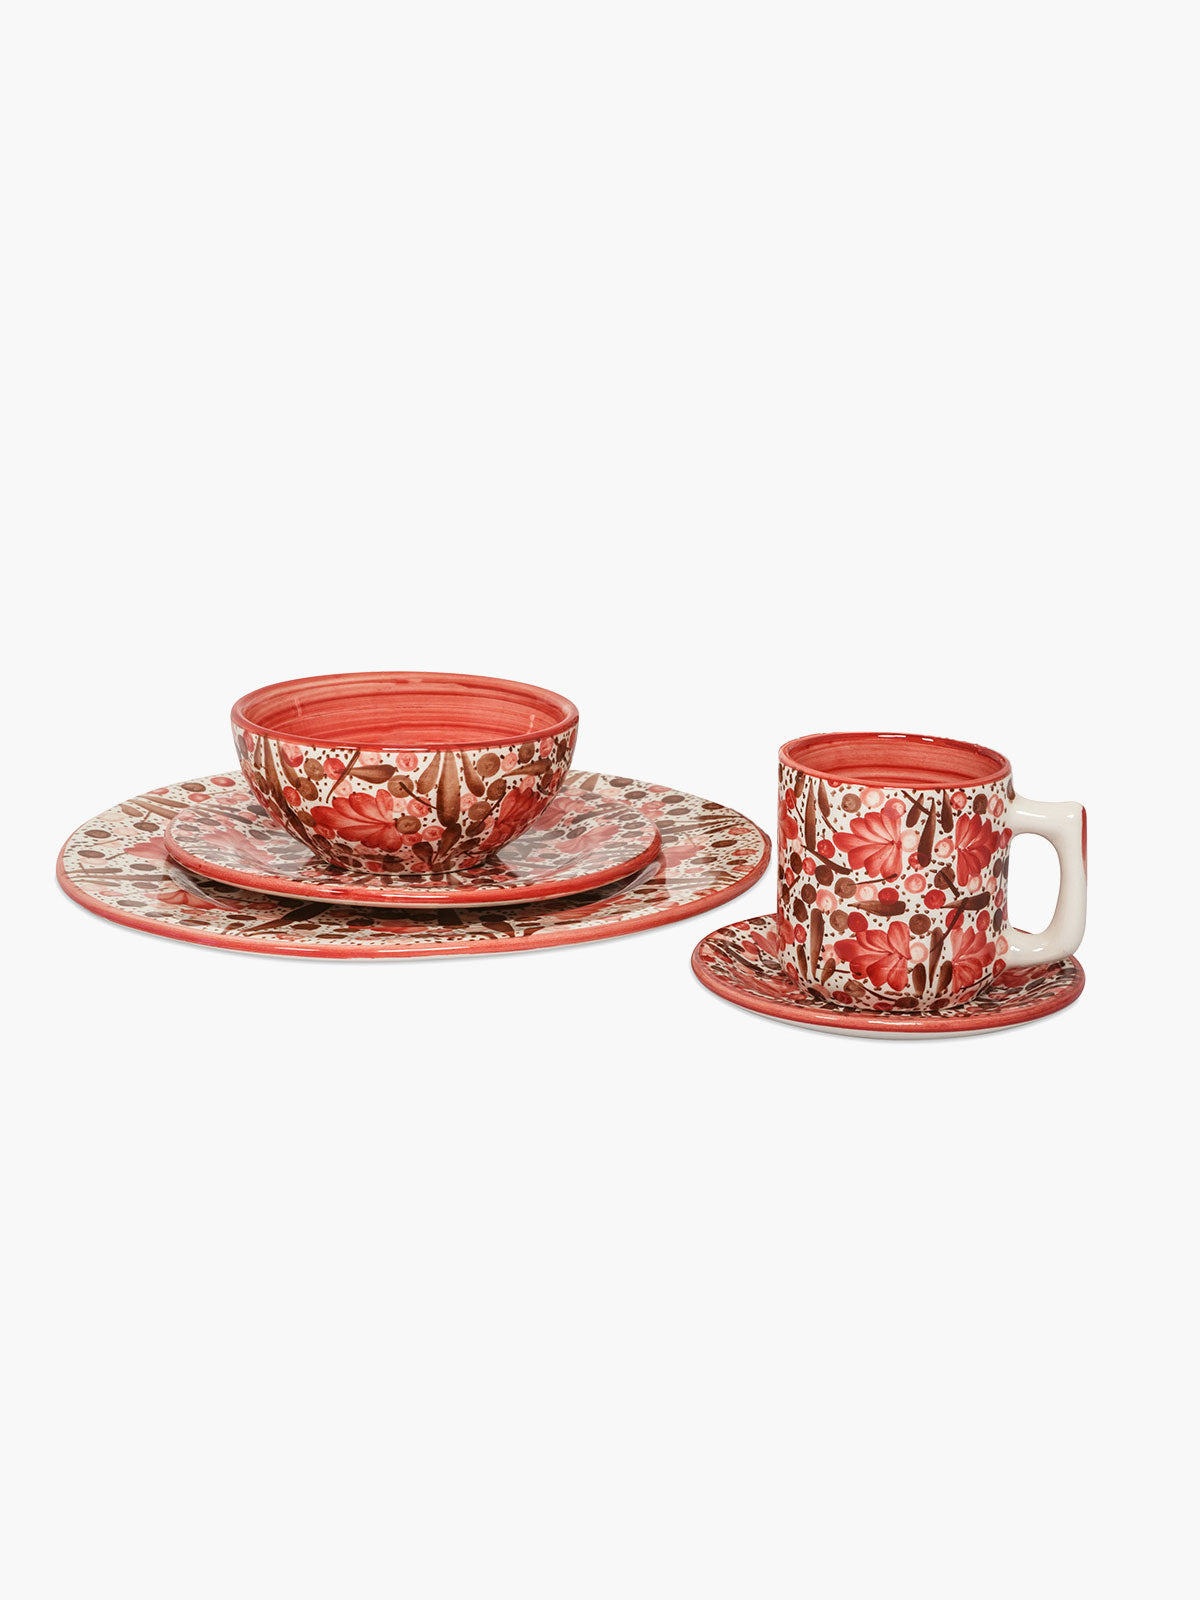 Hand Painted Ceramic Tableware | Coral